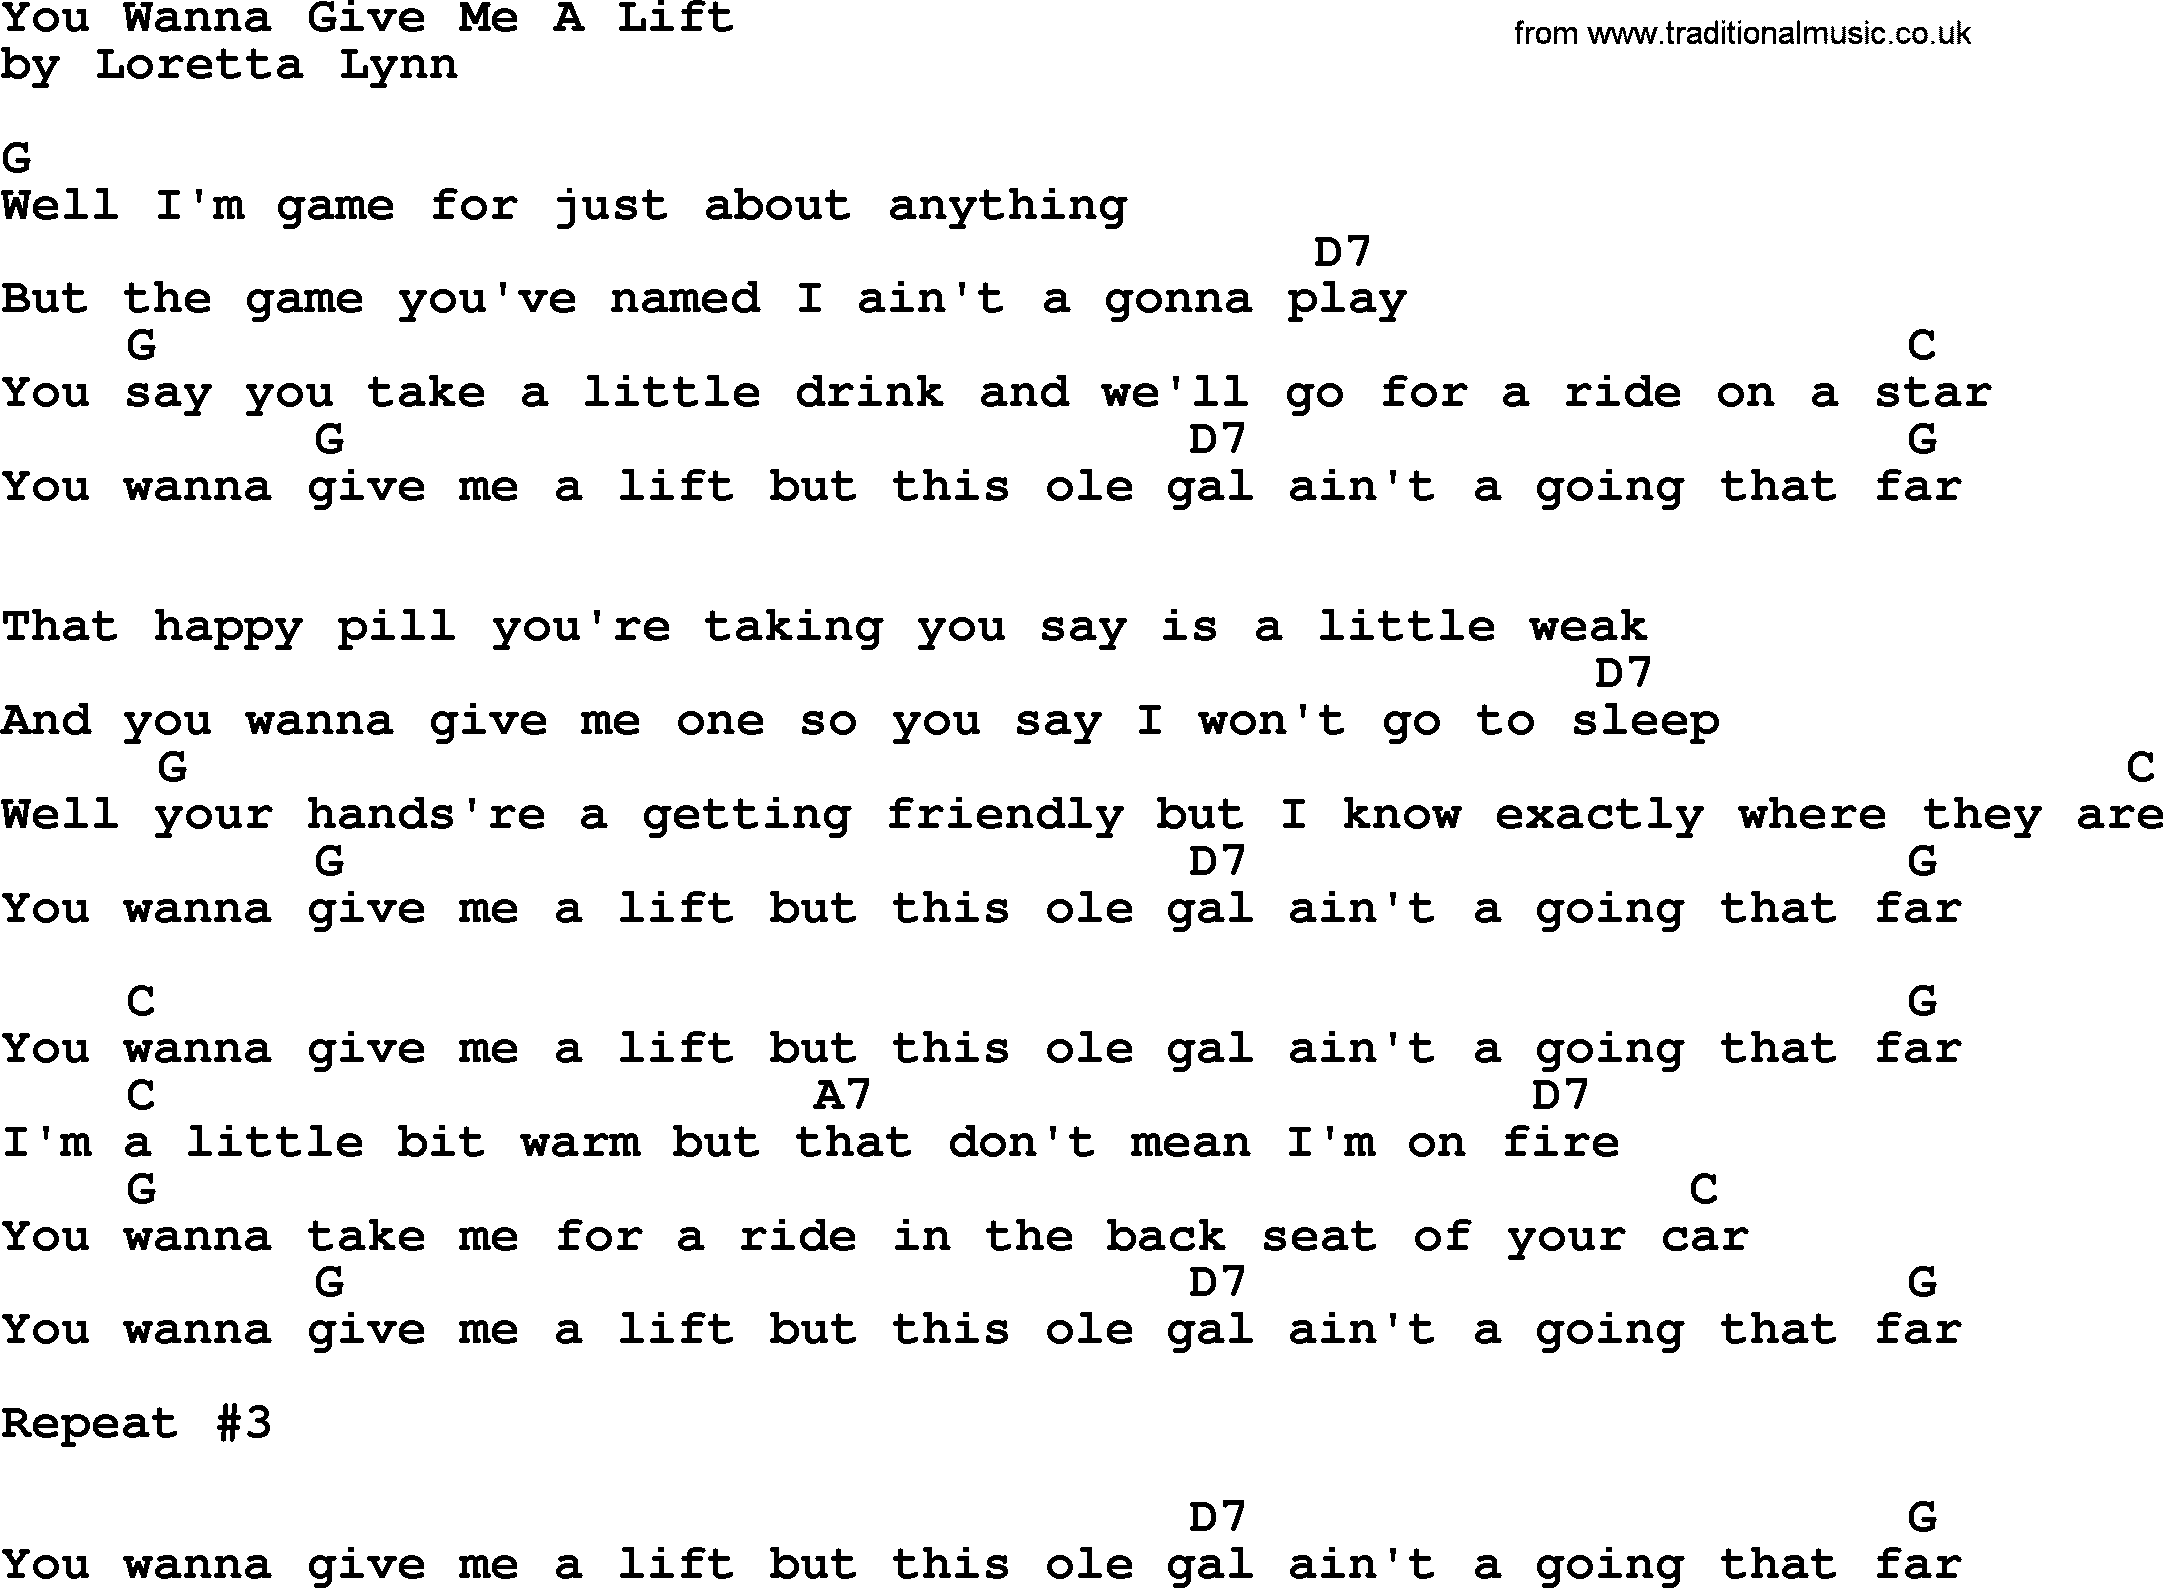 Loretta Lynn song: You Wanna Give Me A Lift lyrics and chords